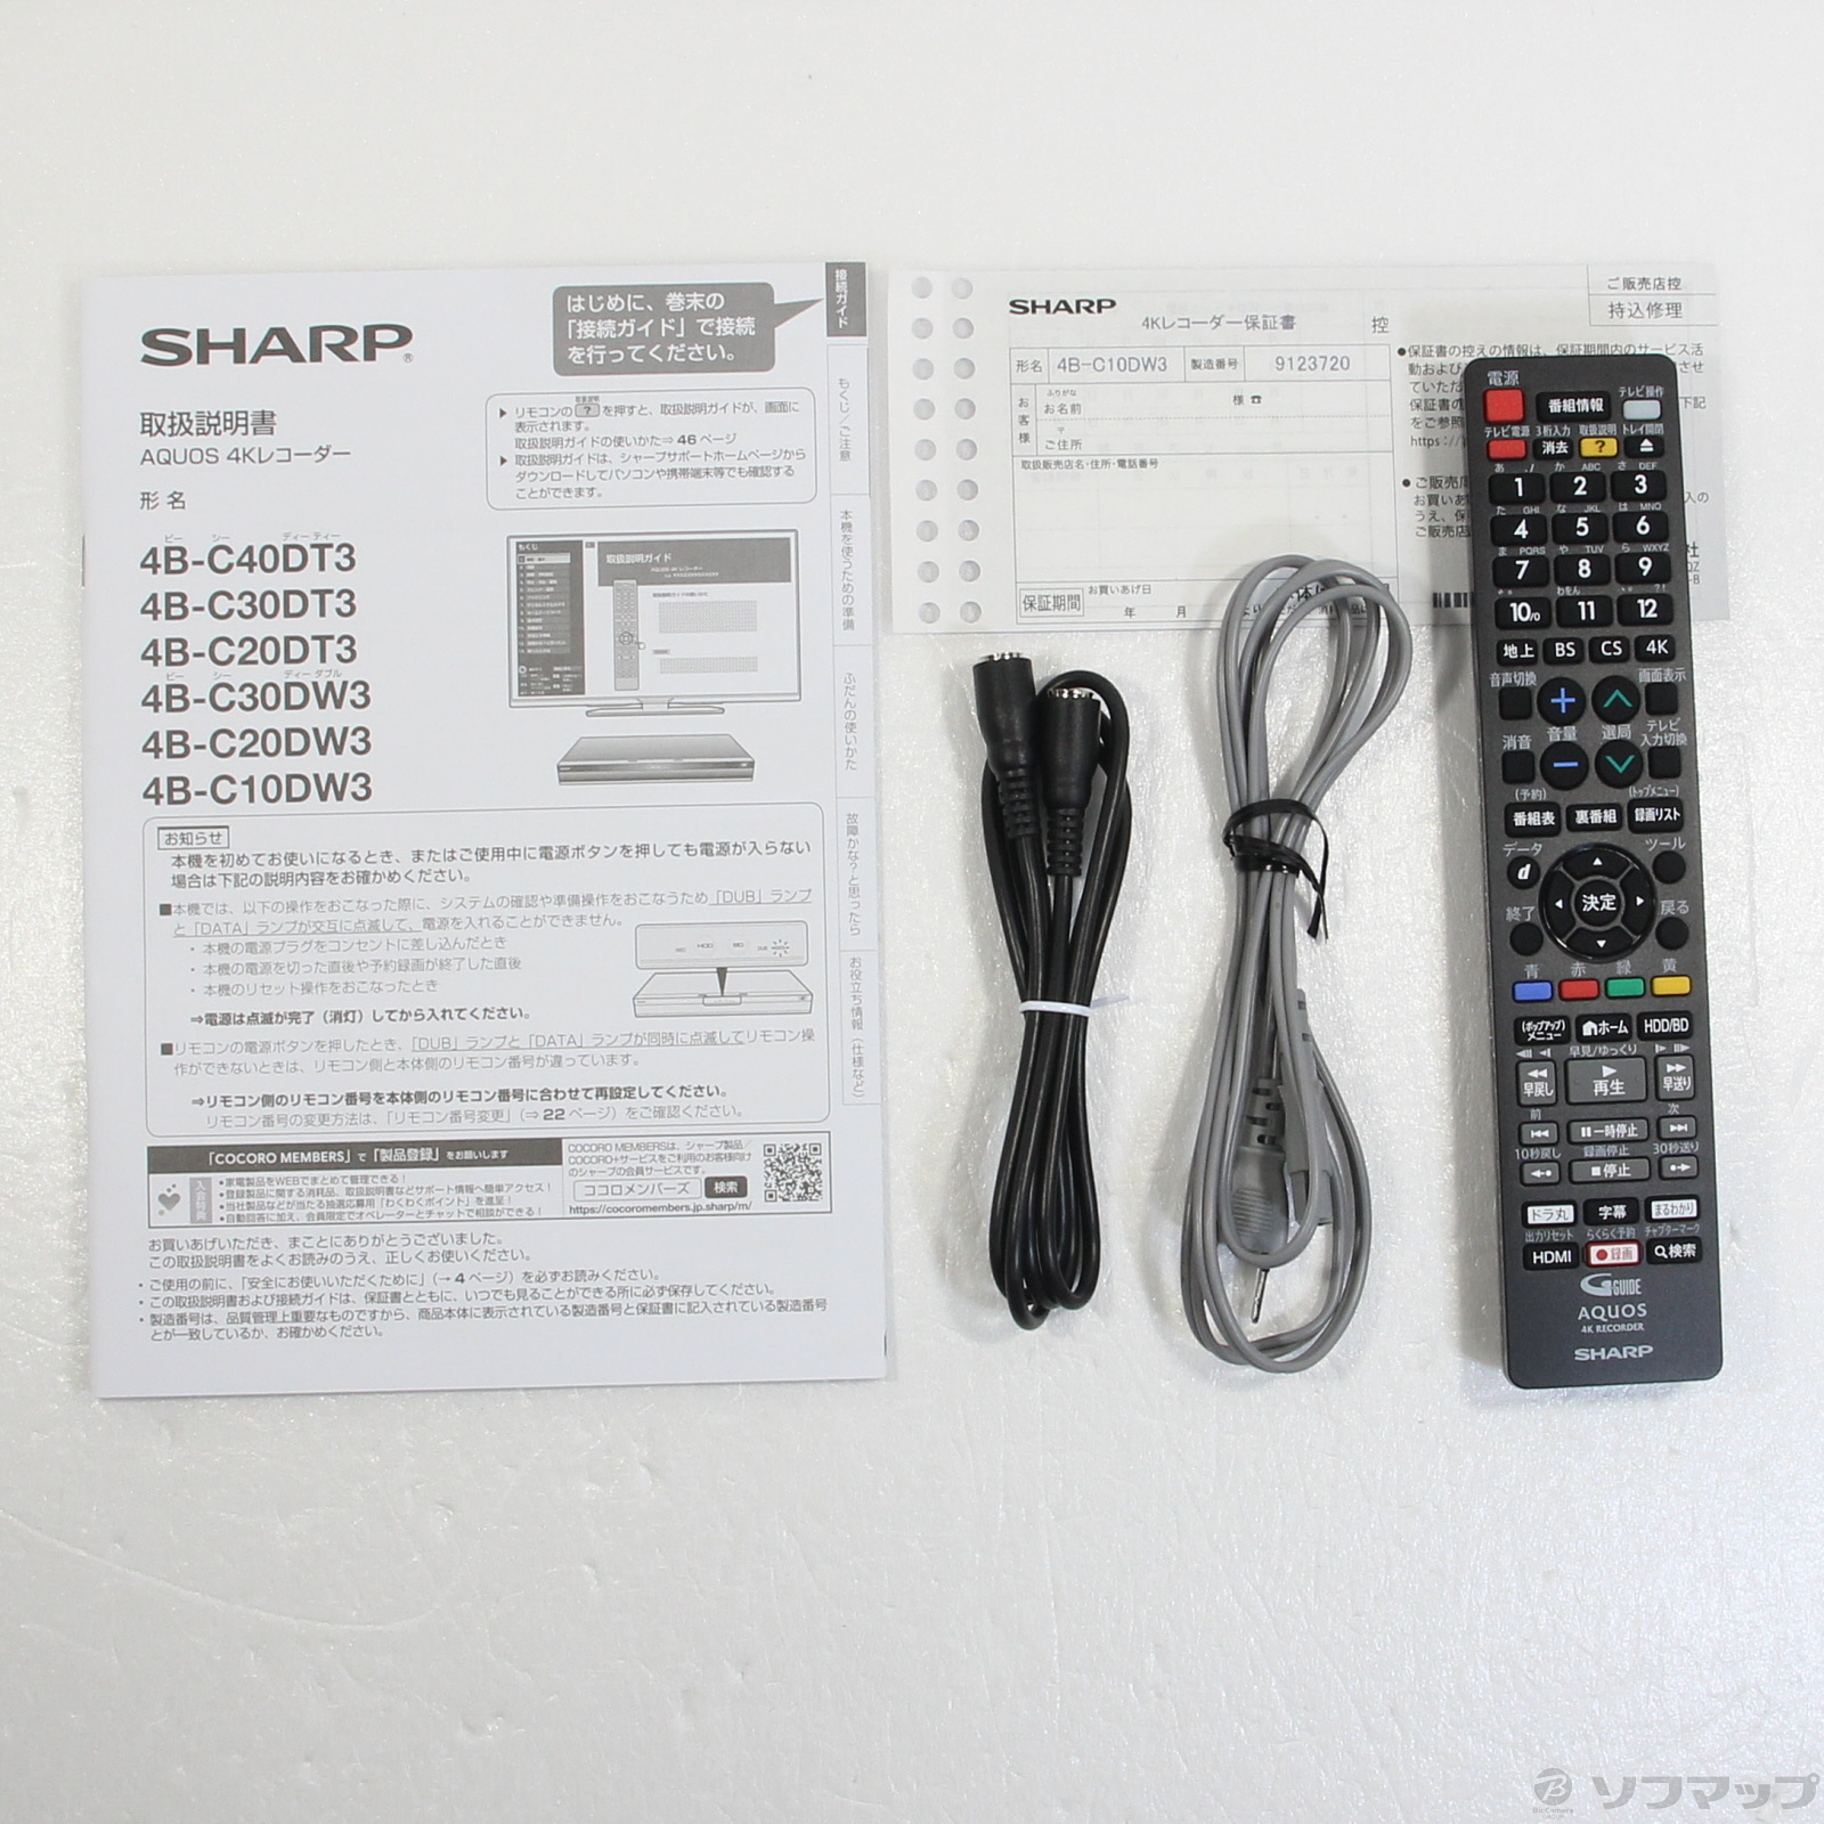 SHARP 4B-C10DW3 BLACK - 映像機器